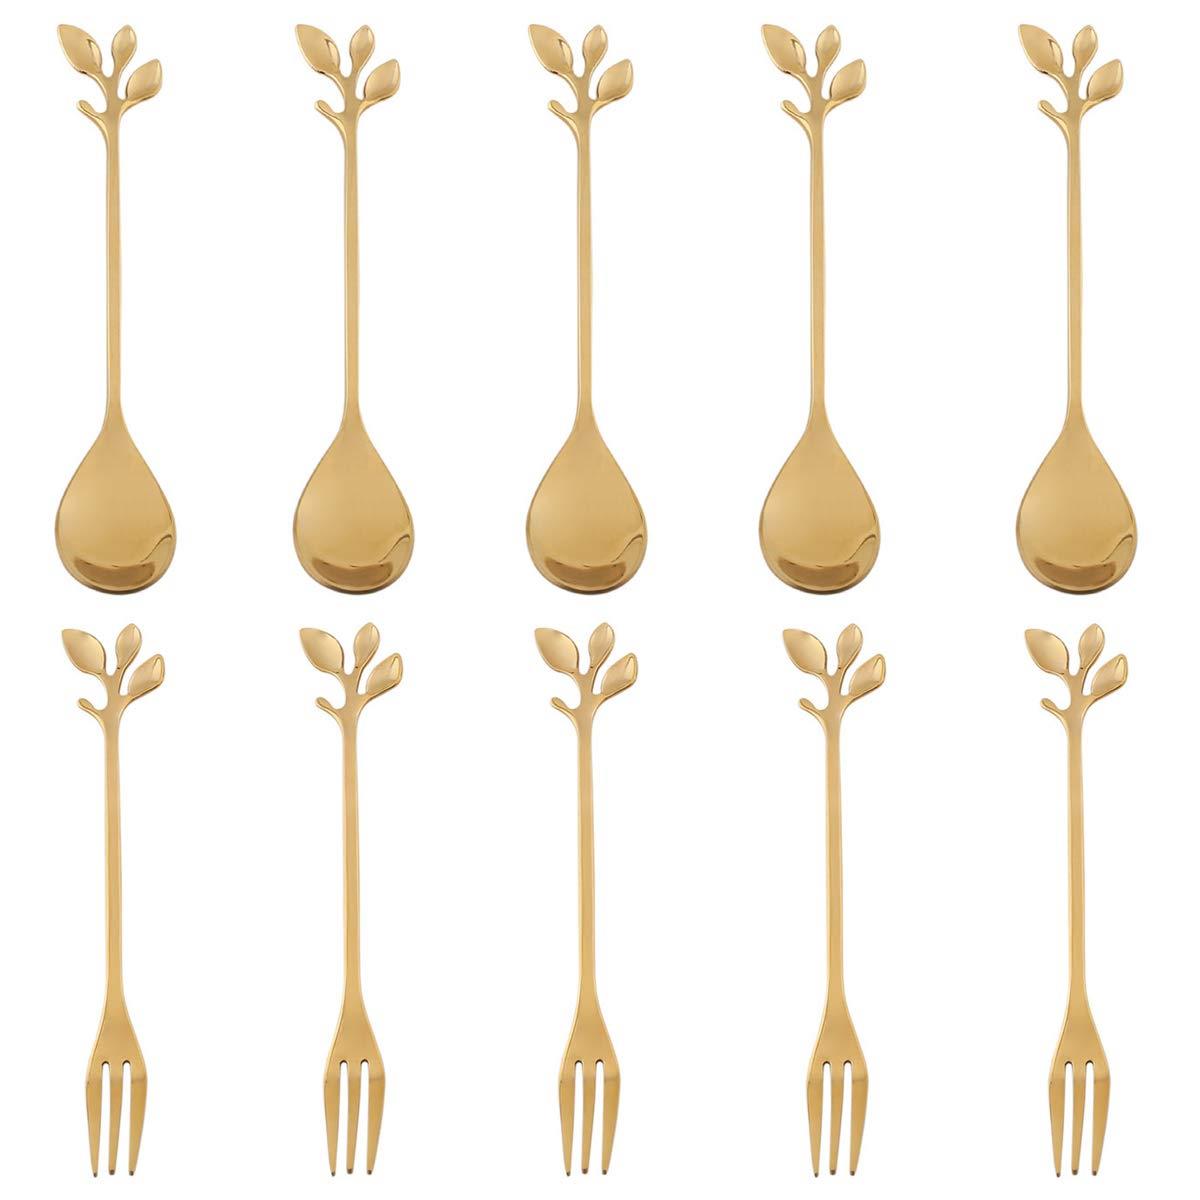 Coffee Cake Spoon Fork Teaspoon Set with 5Spoon+5Forks